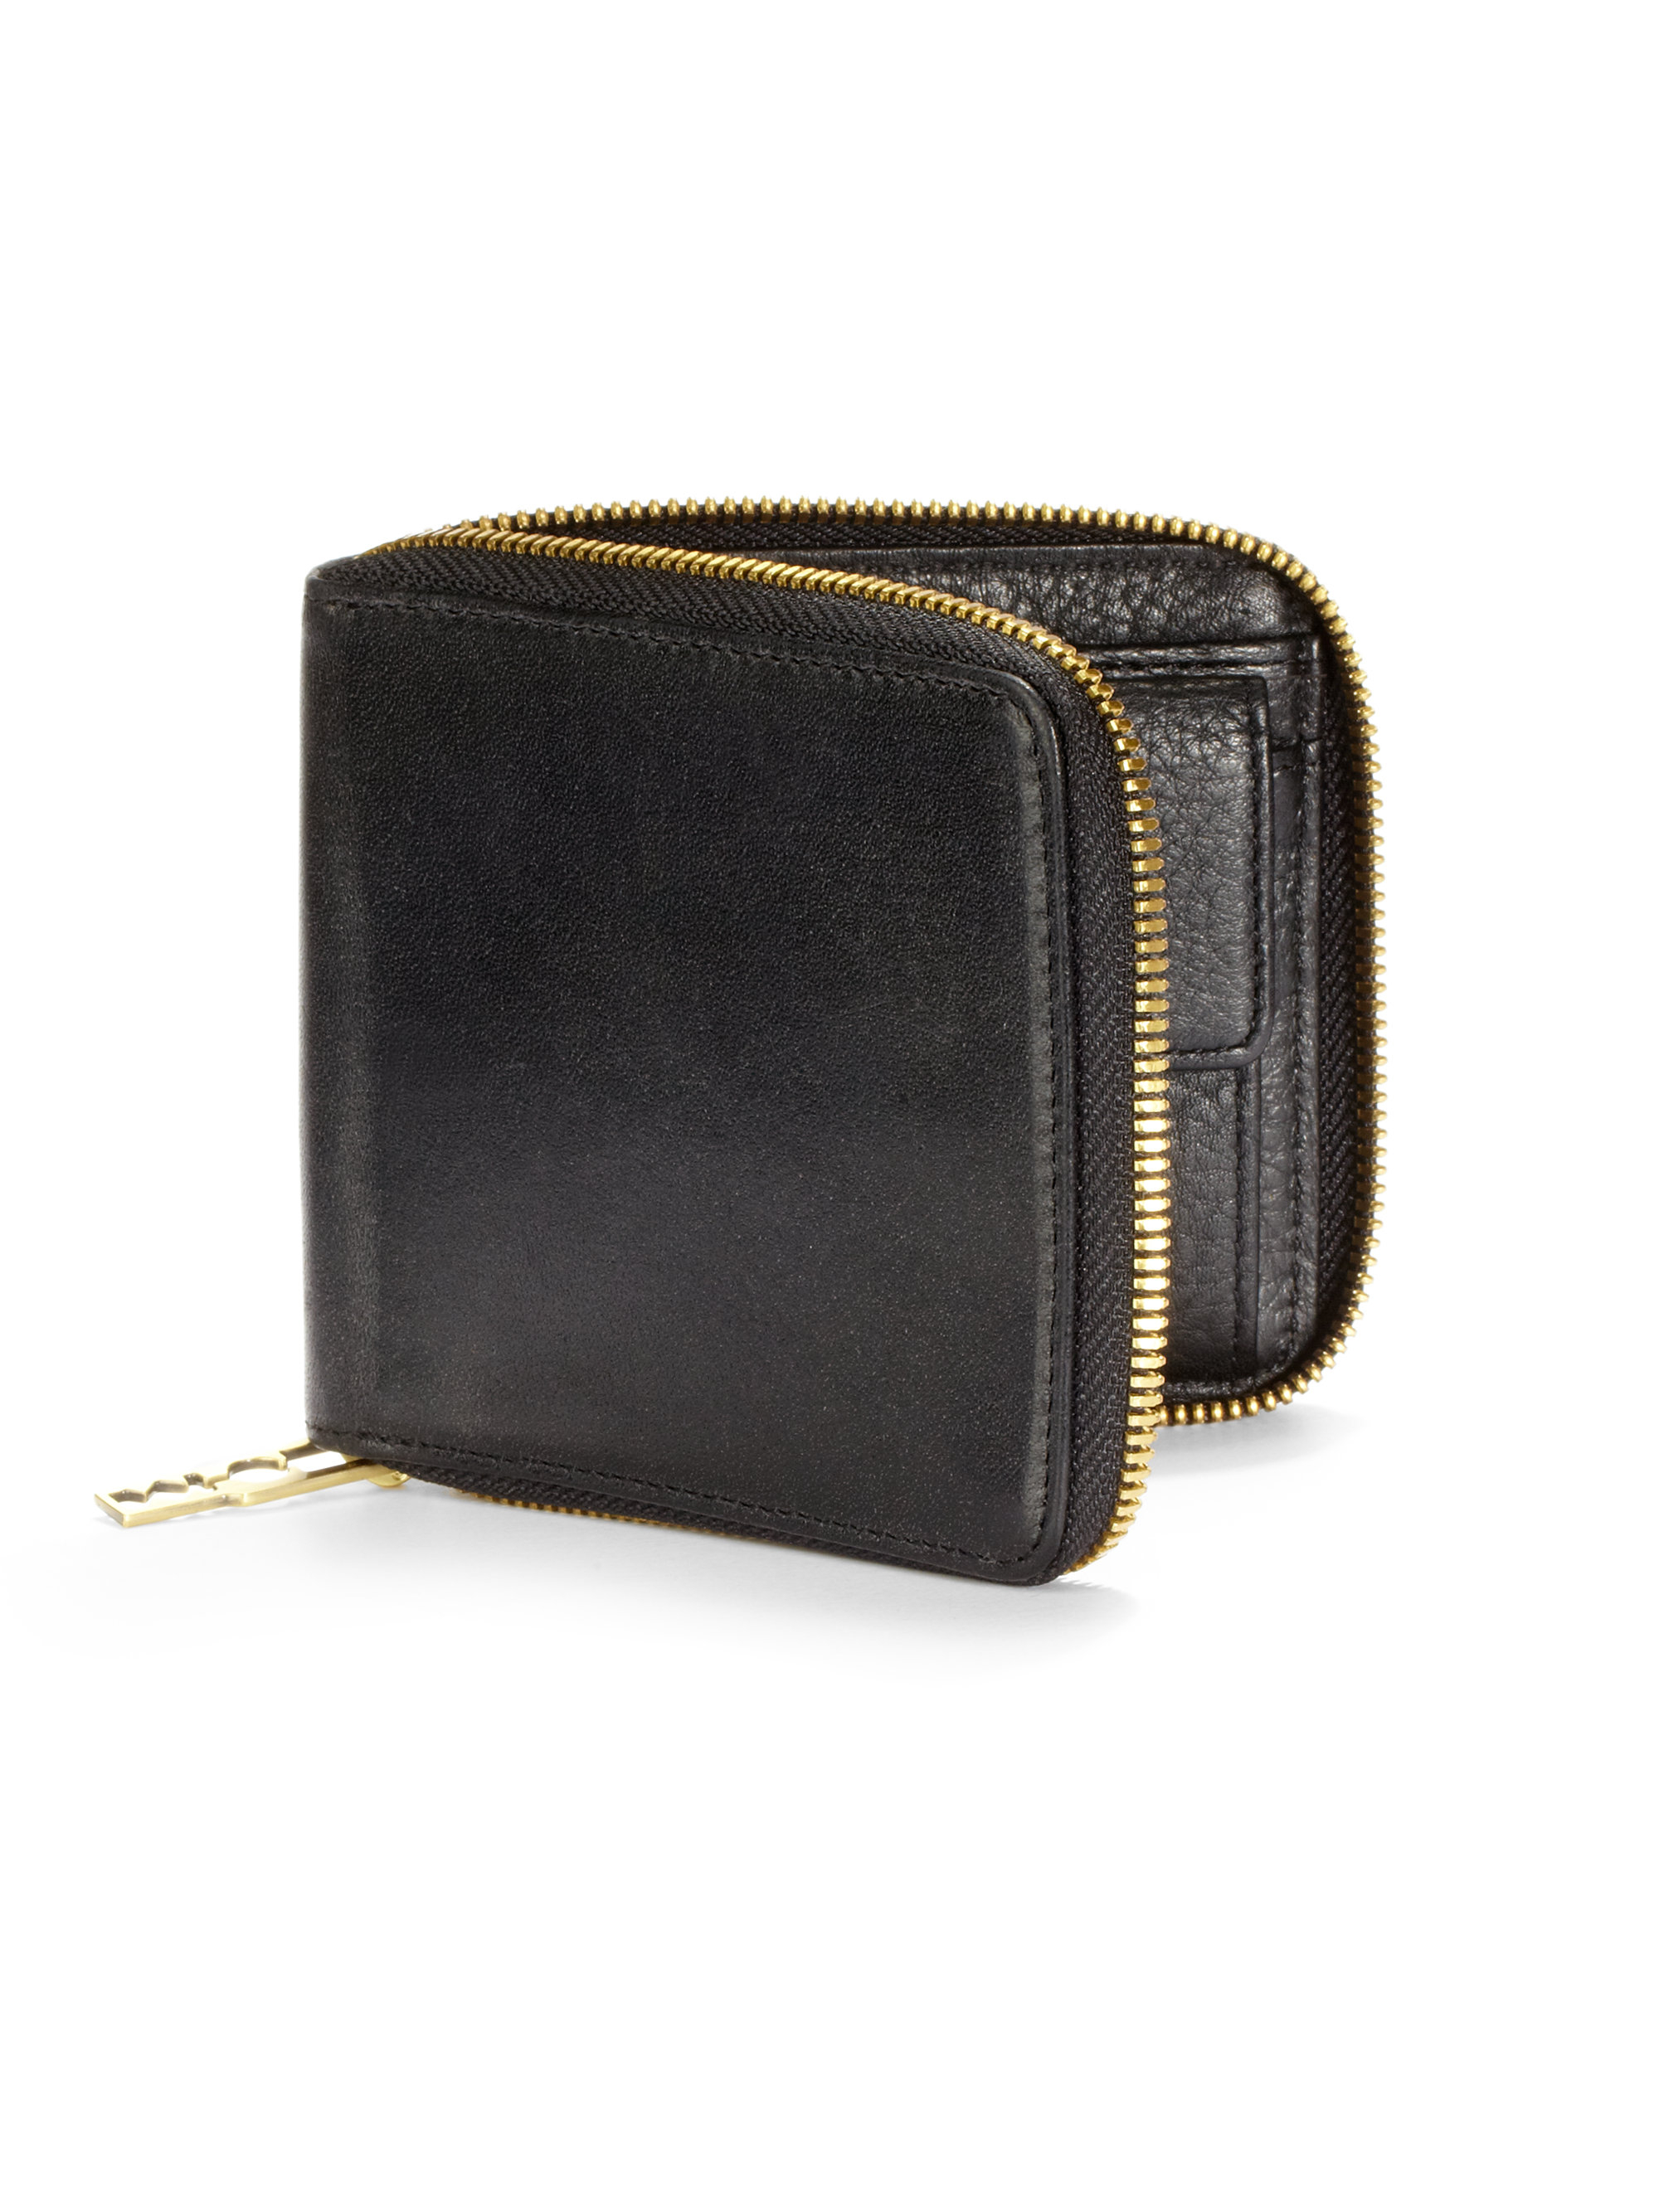 Lyst - Mcq Grainy Leather Zip-Around Wallet in Black